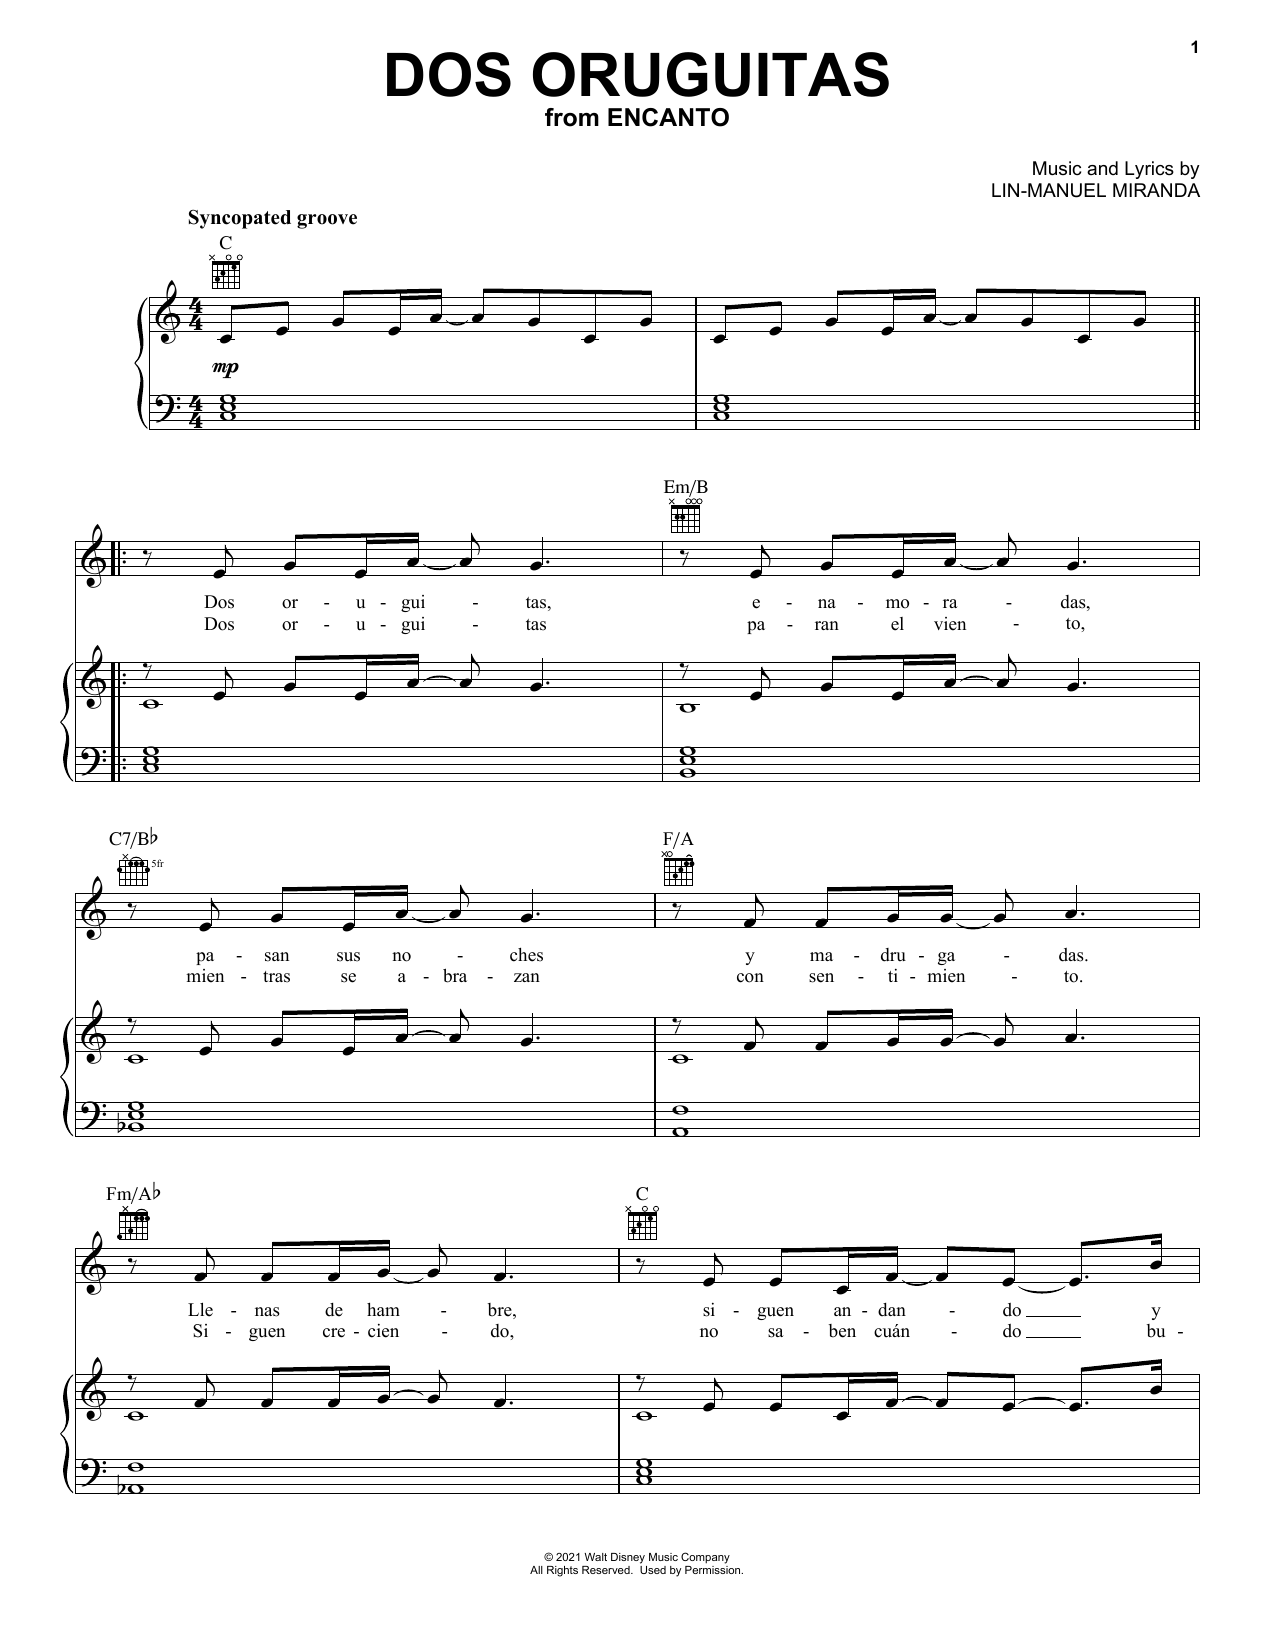 Lin-Manuel Miranda Dos Oruguitas (from Encanto) Sheet Music Notes & Chords for Ocarina - Download or Print PDF